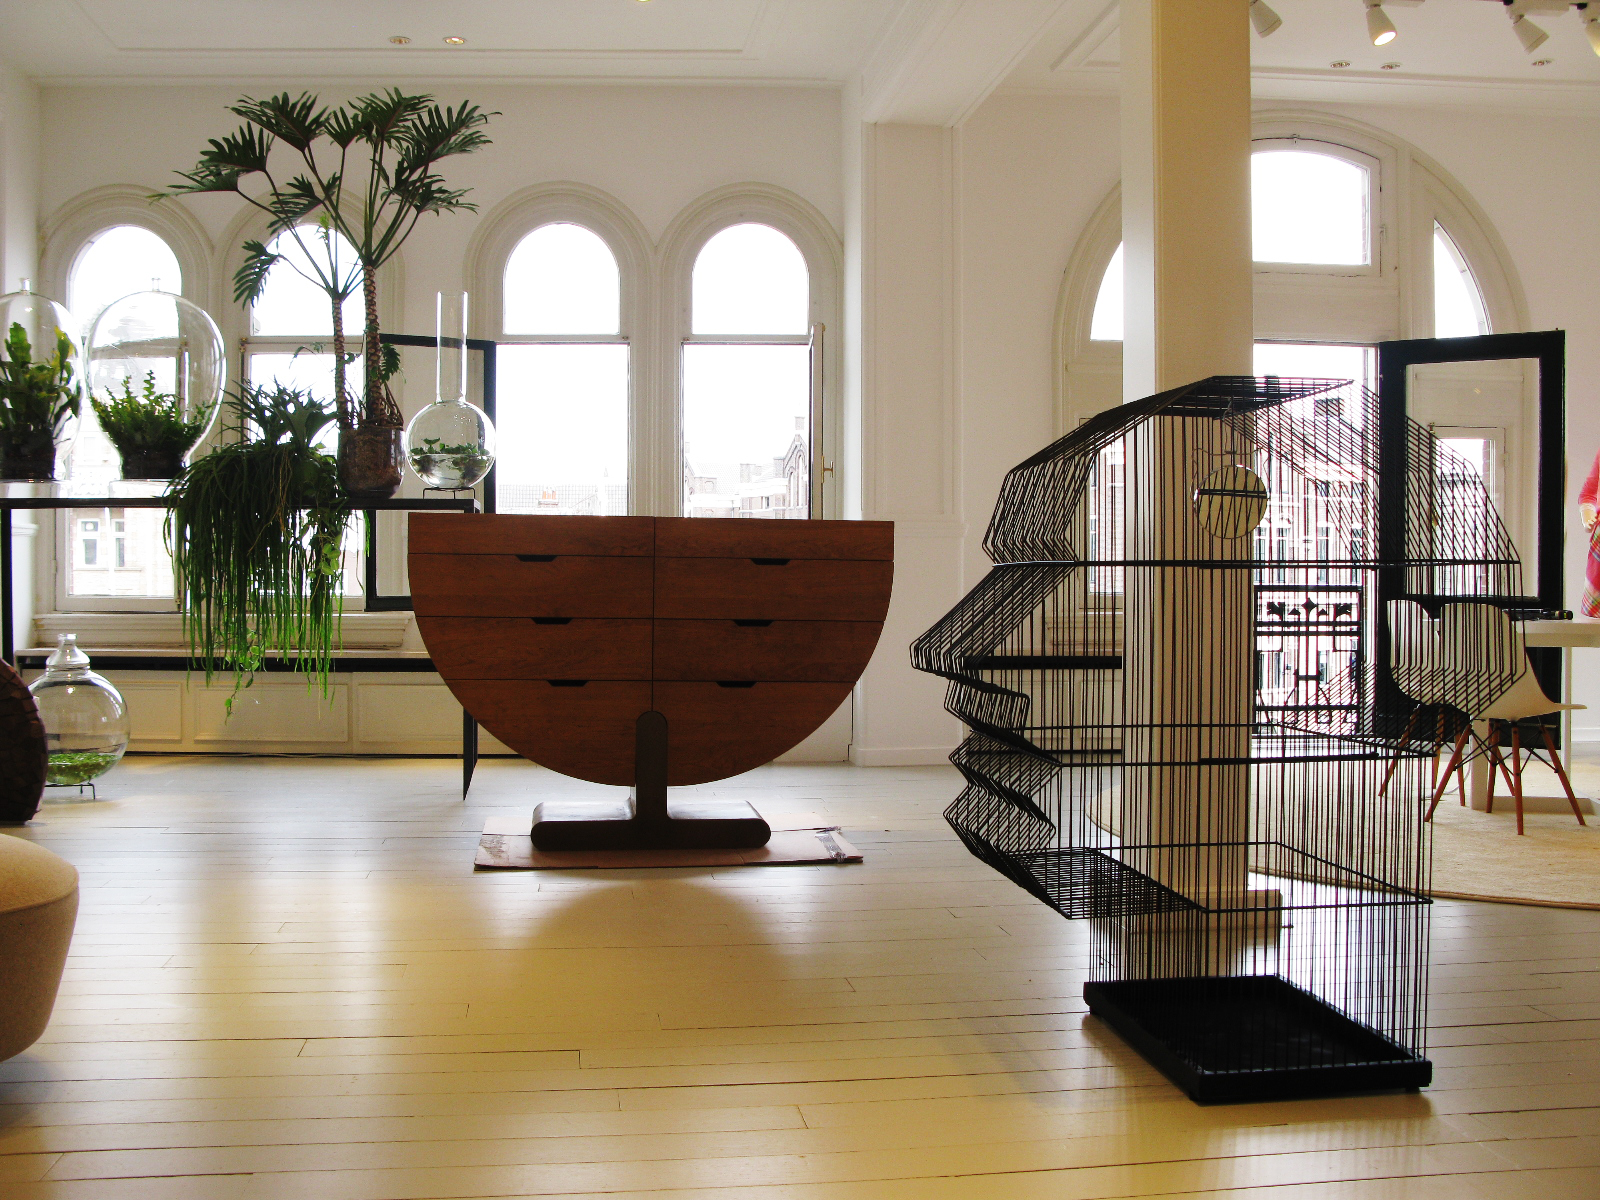 Beringstraat Getand interieur The Birdcage, De Vogelkooi (la Cage aux Folles) - Serge Verheugen Serge  Verheugen